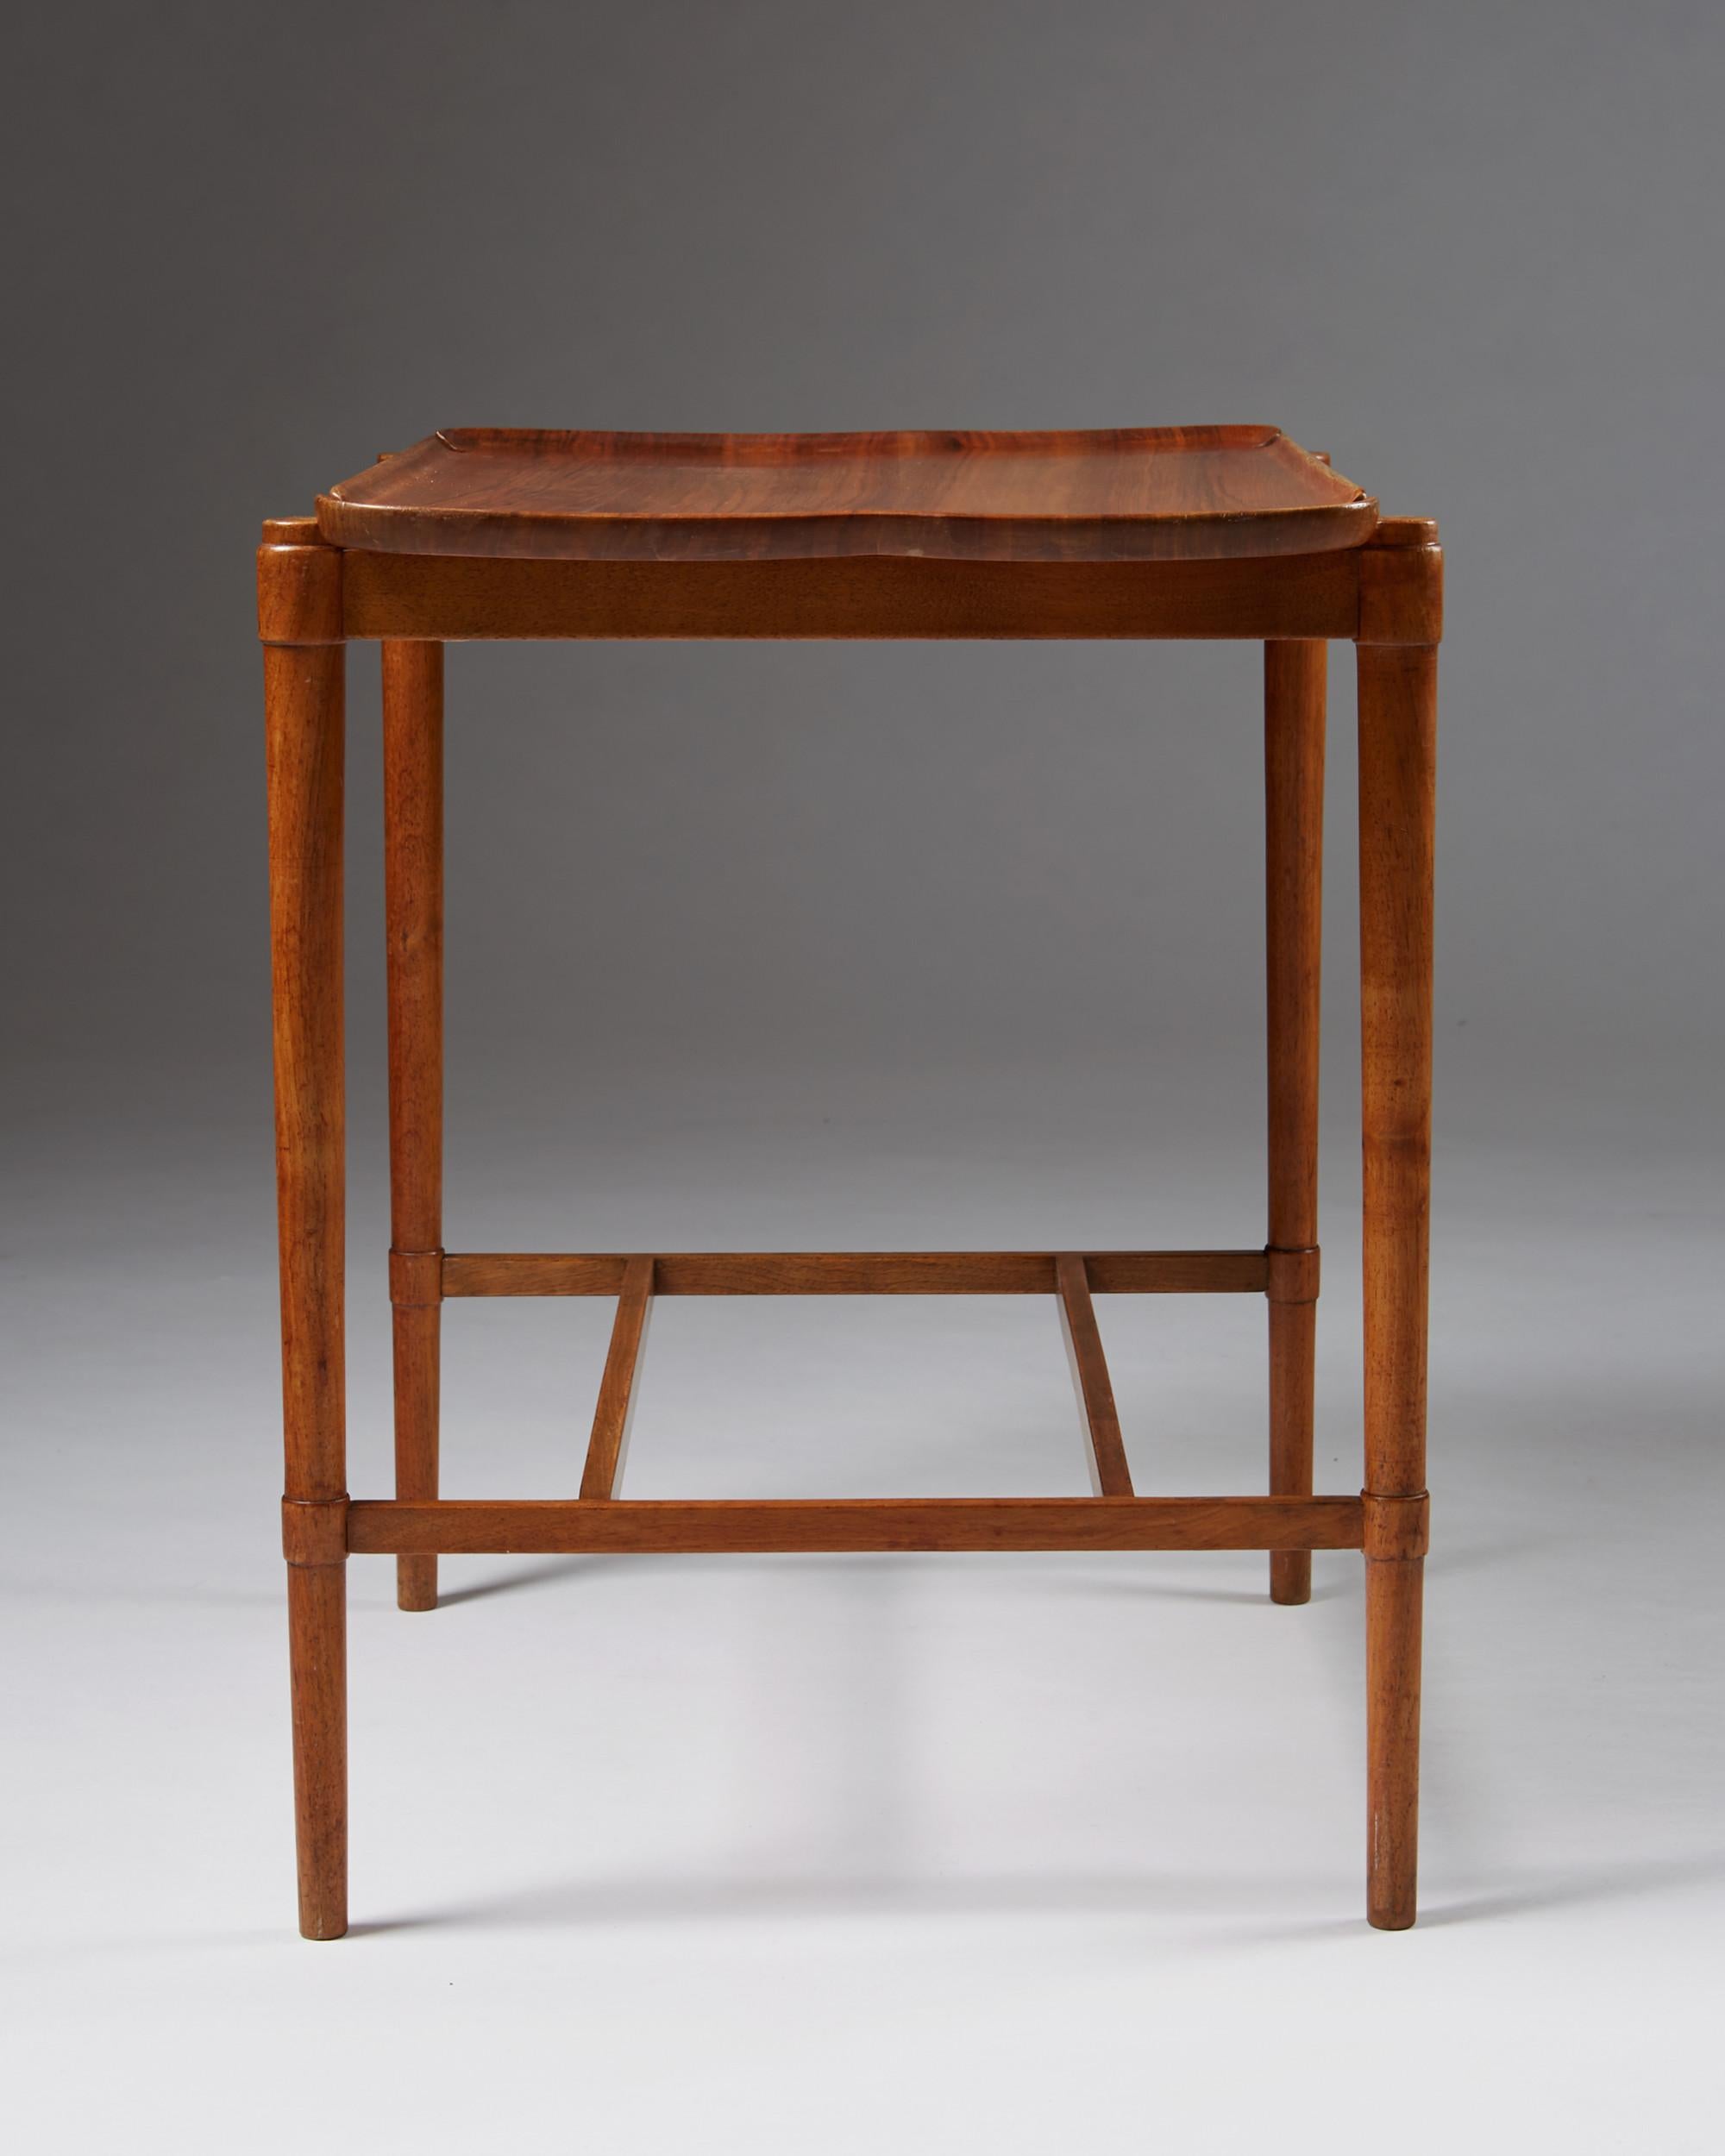 Swedish Occasional Table Designed by Peder Hvidt for Fritz Hansen, Denmark, 1943